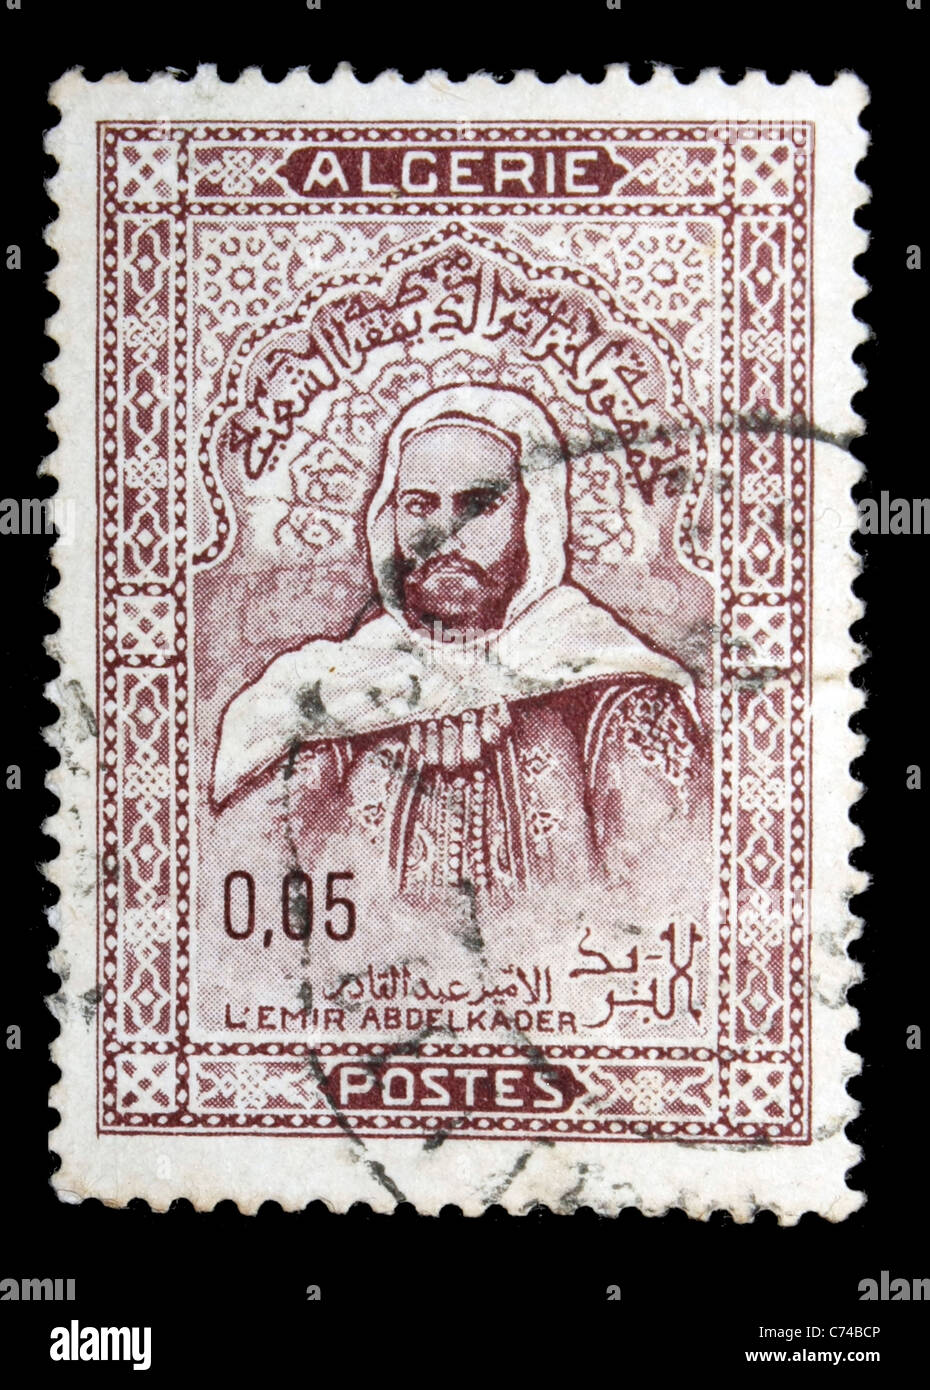 L'emir Abdelkader Algeria postage stamp Stock Photo